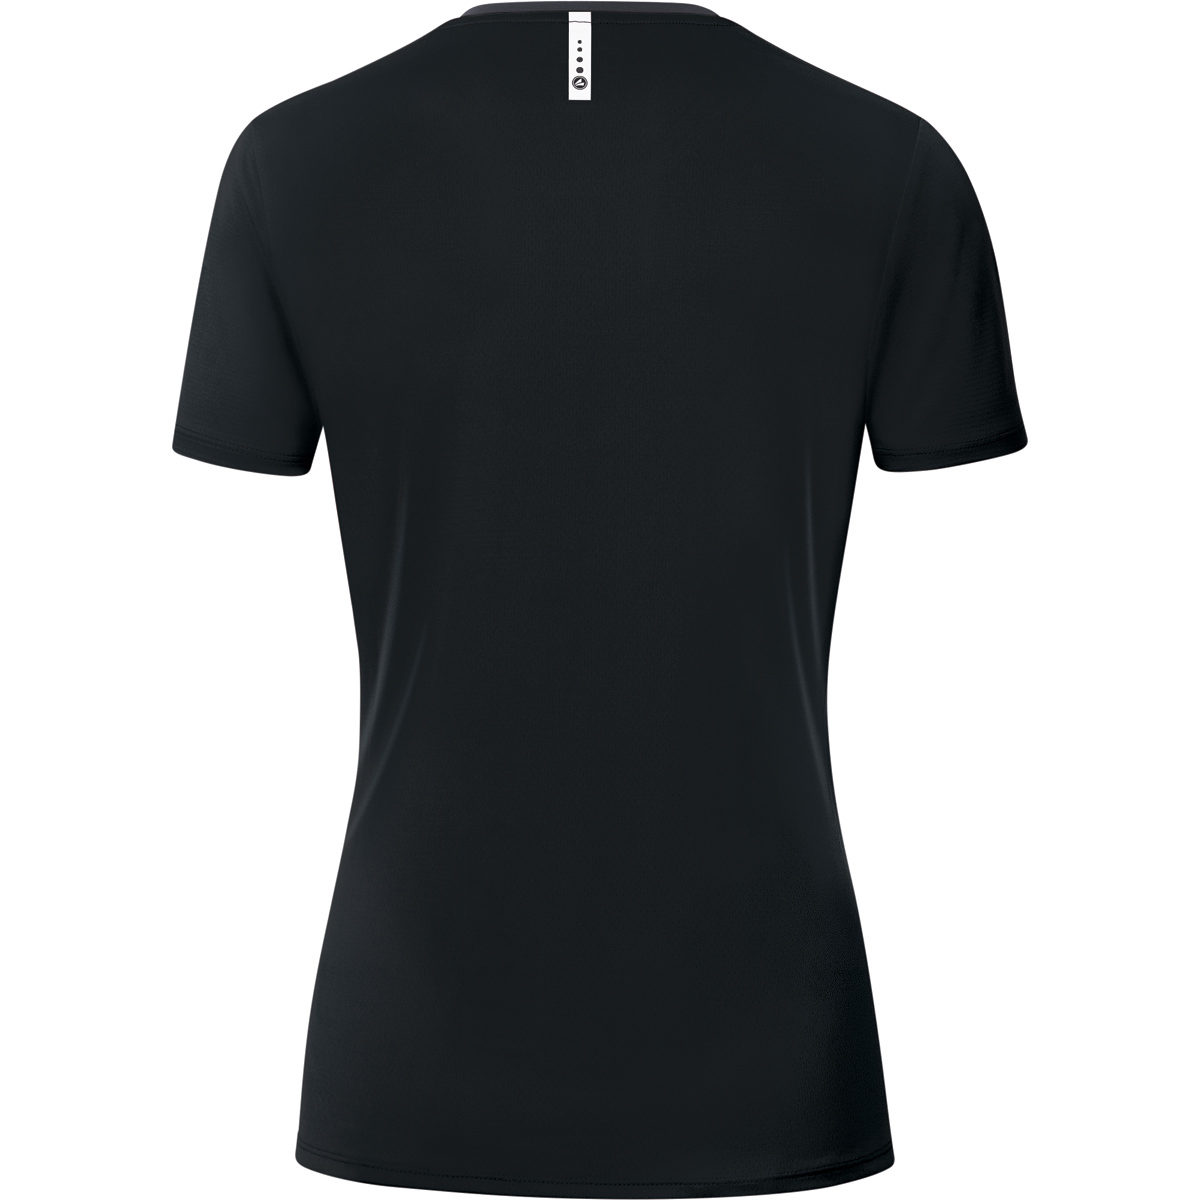 JAKO T-Shirt Champ 2.0 schwarz/anthrazit, 6120 Gr. 44, Damen